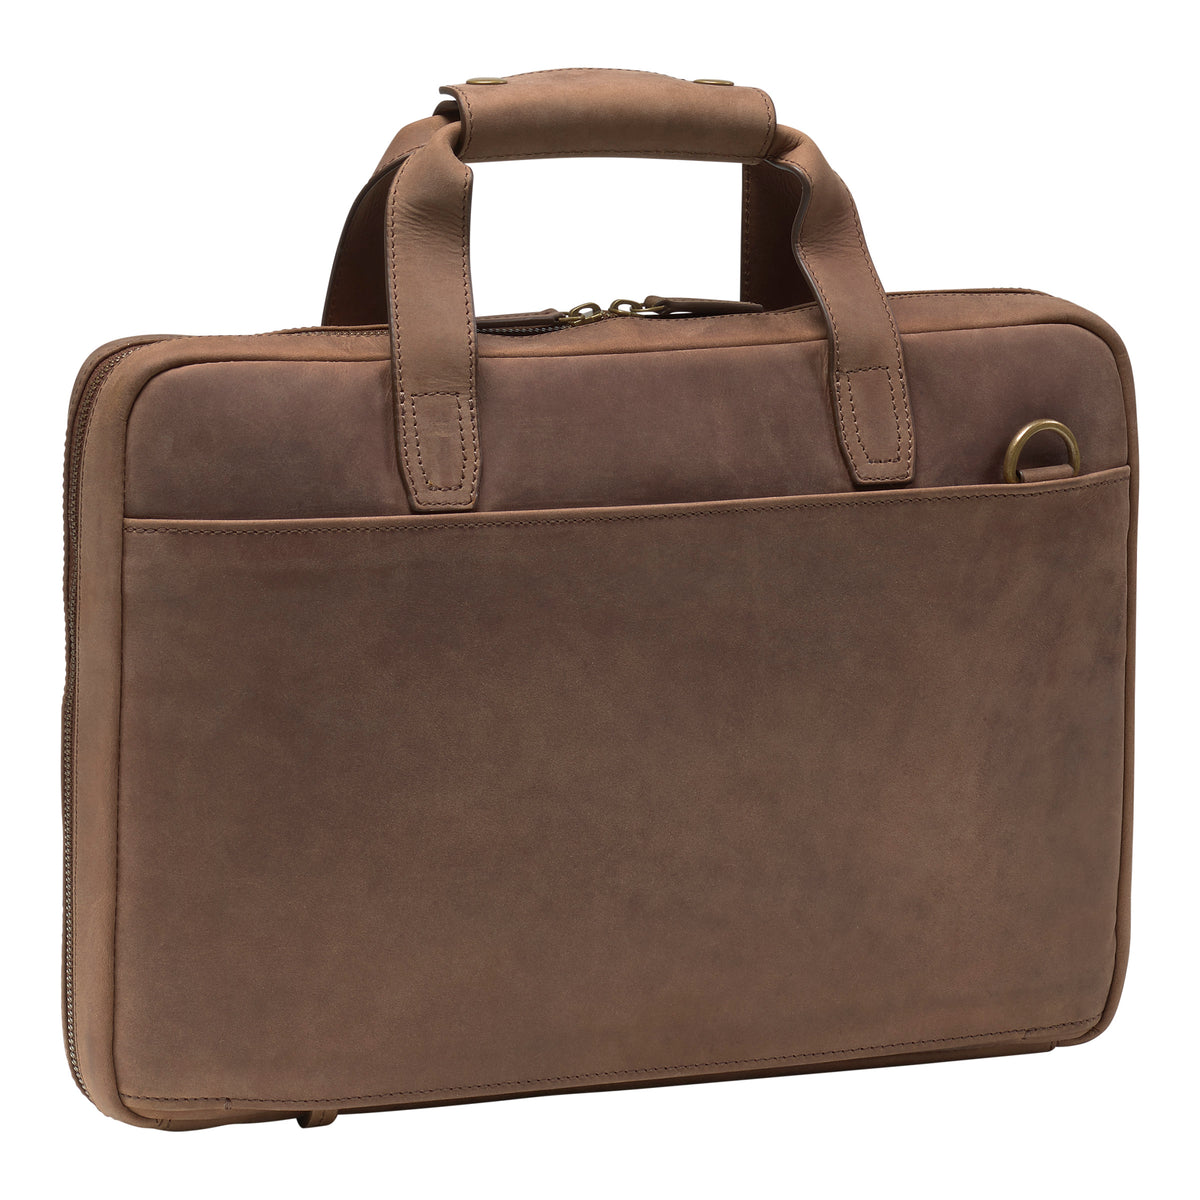 Lord & Taylor leather handbag/briefcase